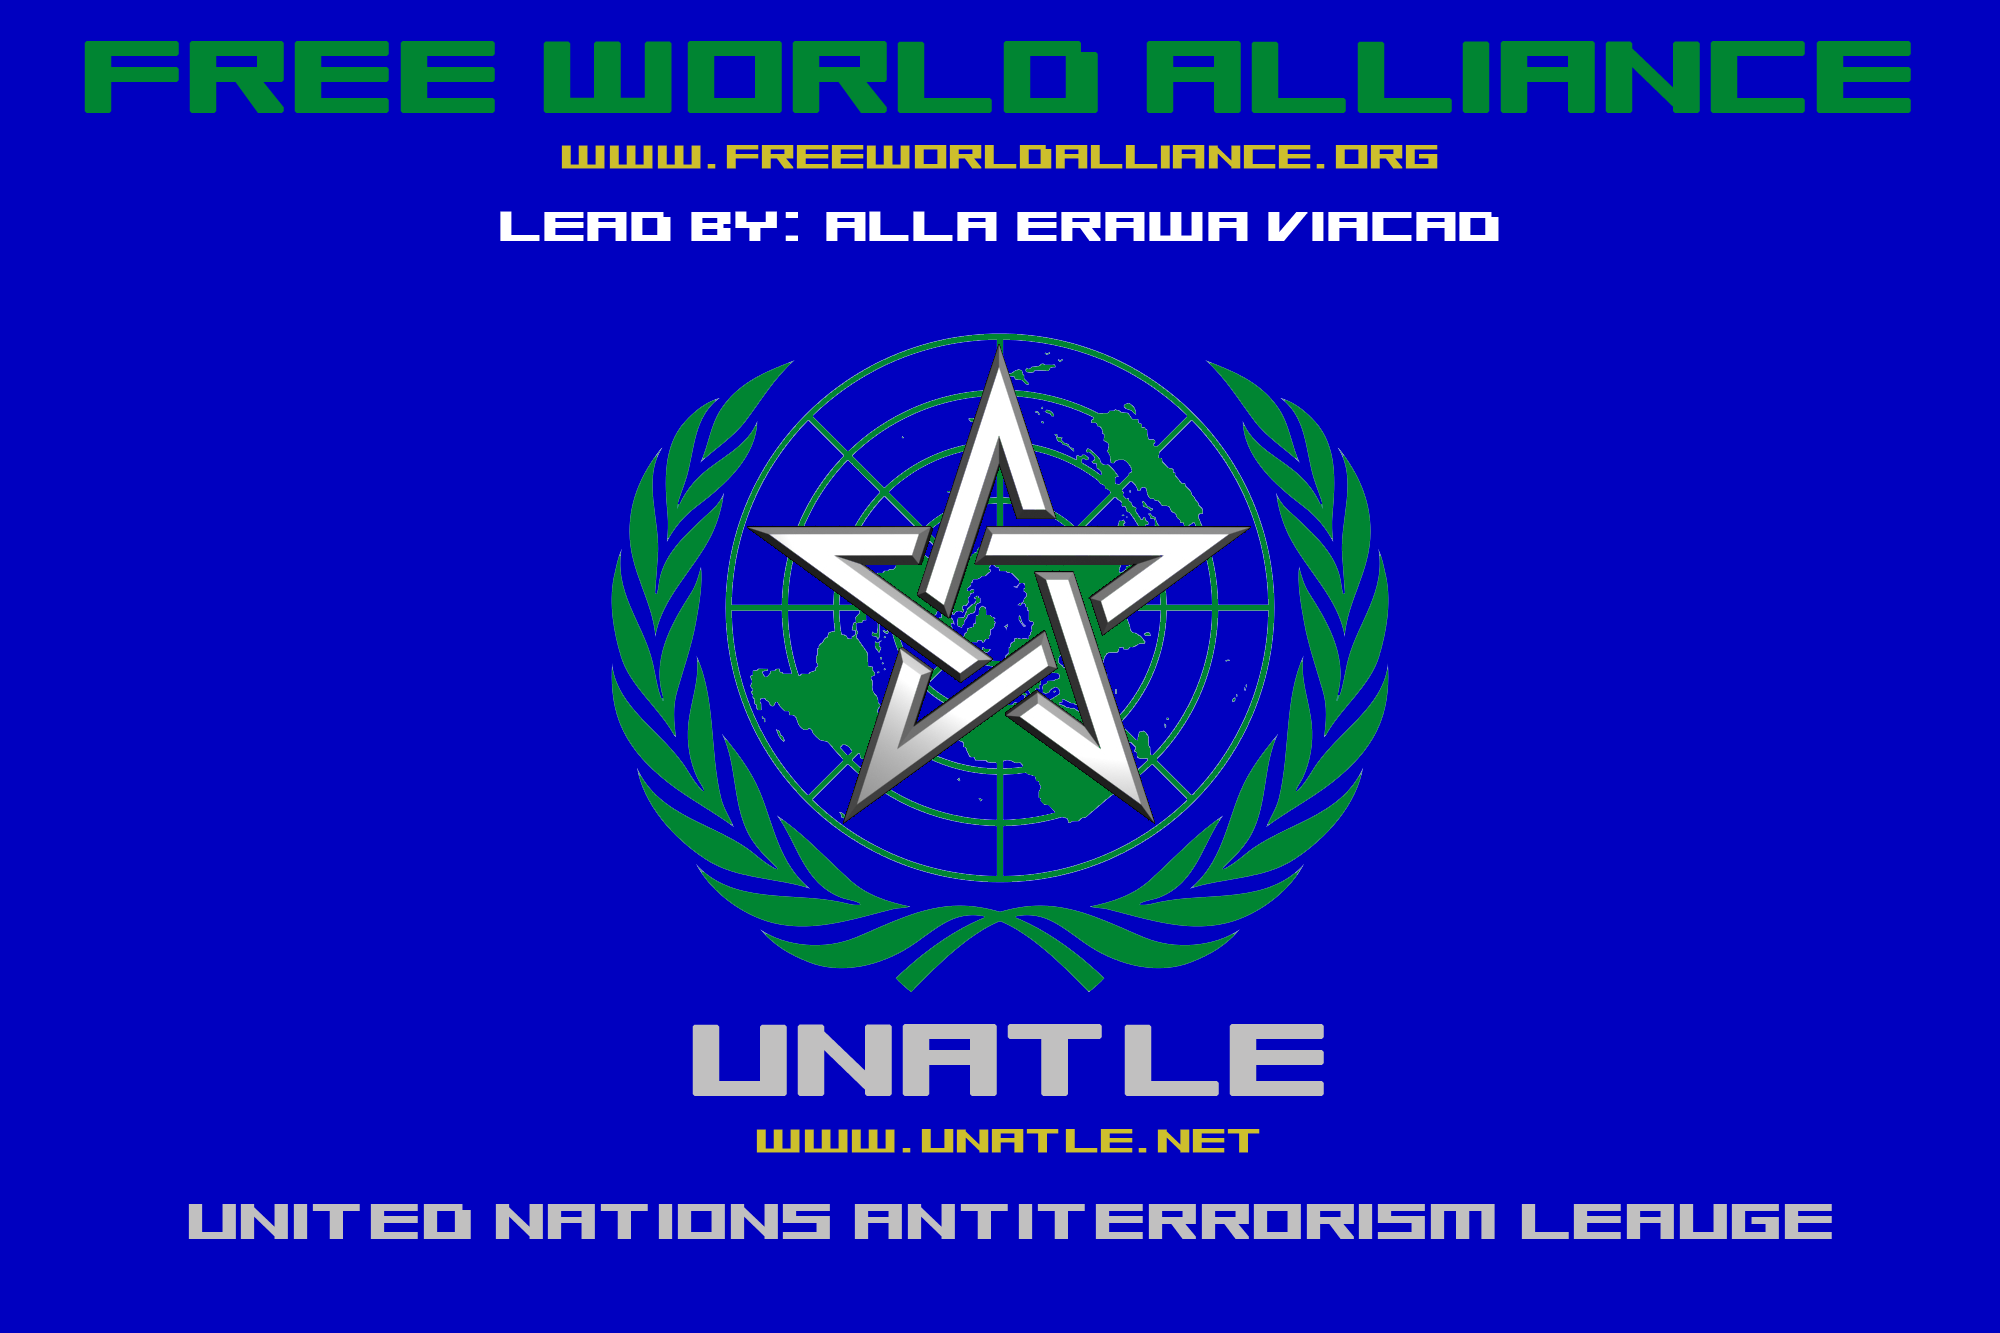 United Nations AntiTerrorism Leauge